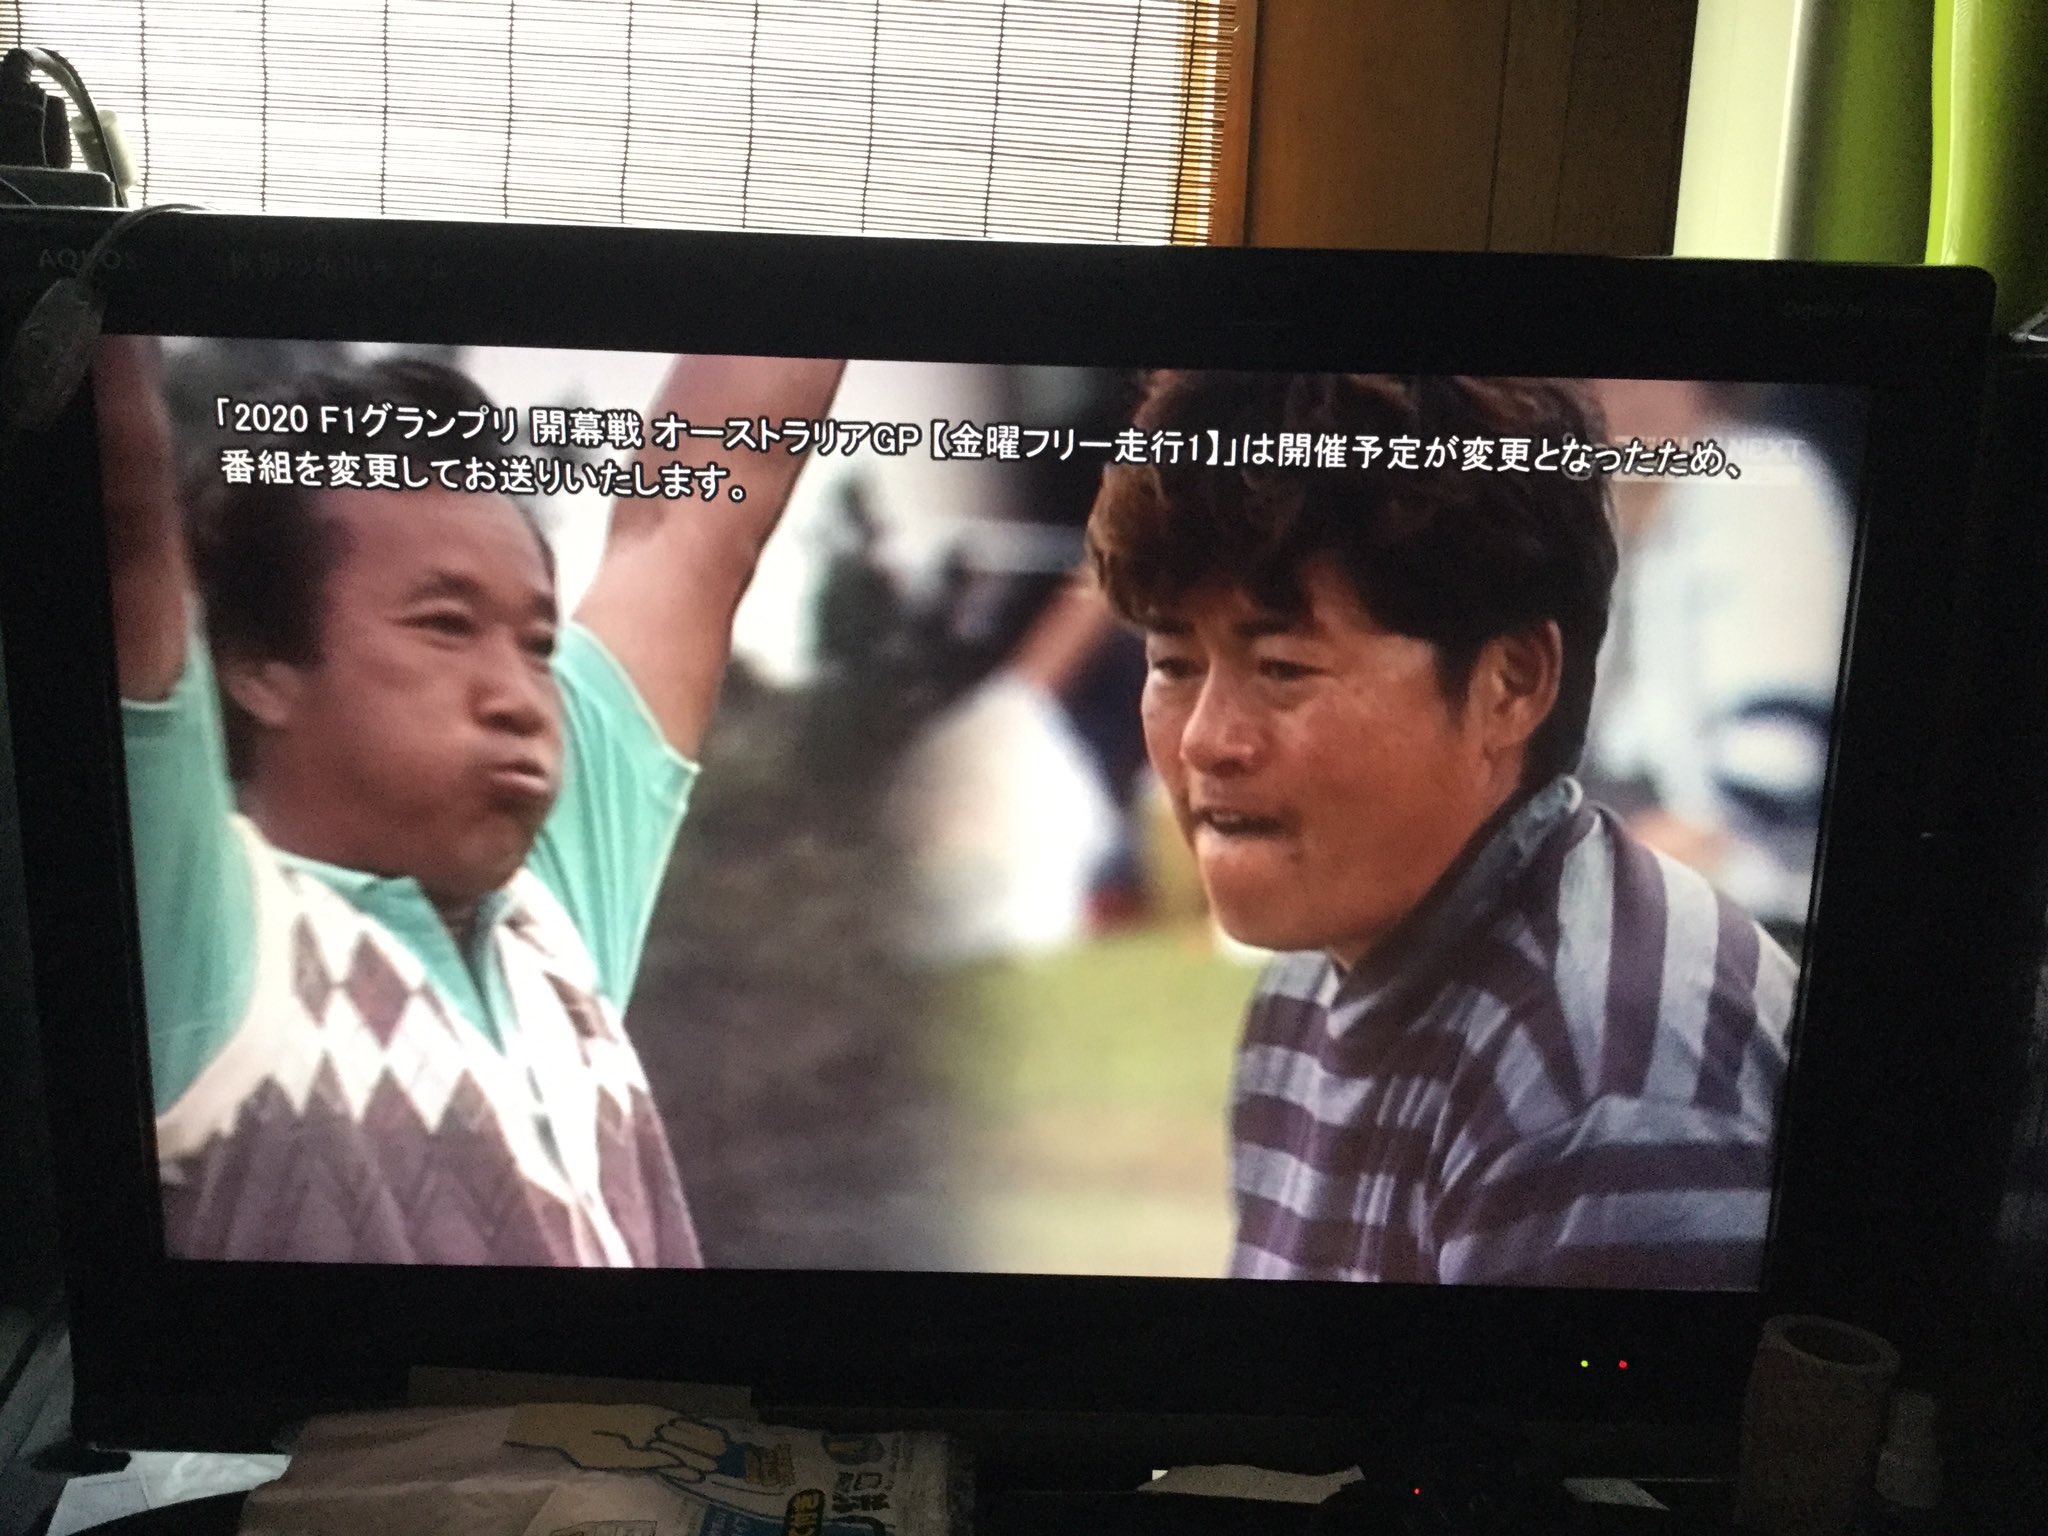 Yoshiki 横浜市瀬谷区 Twitterissa フジテレビnextのf1放送はゴルフの録画放送になりましたとさ T Co O8xs770fg8 Twitter